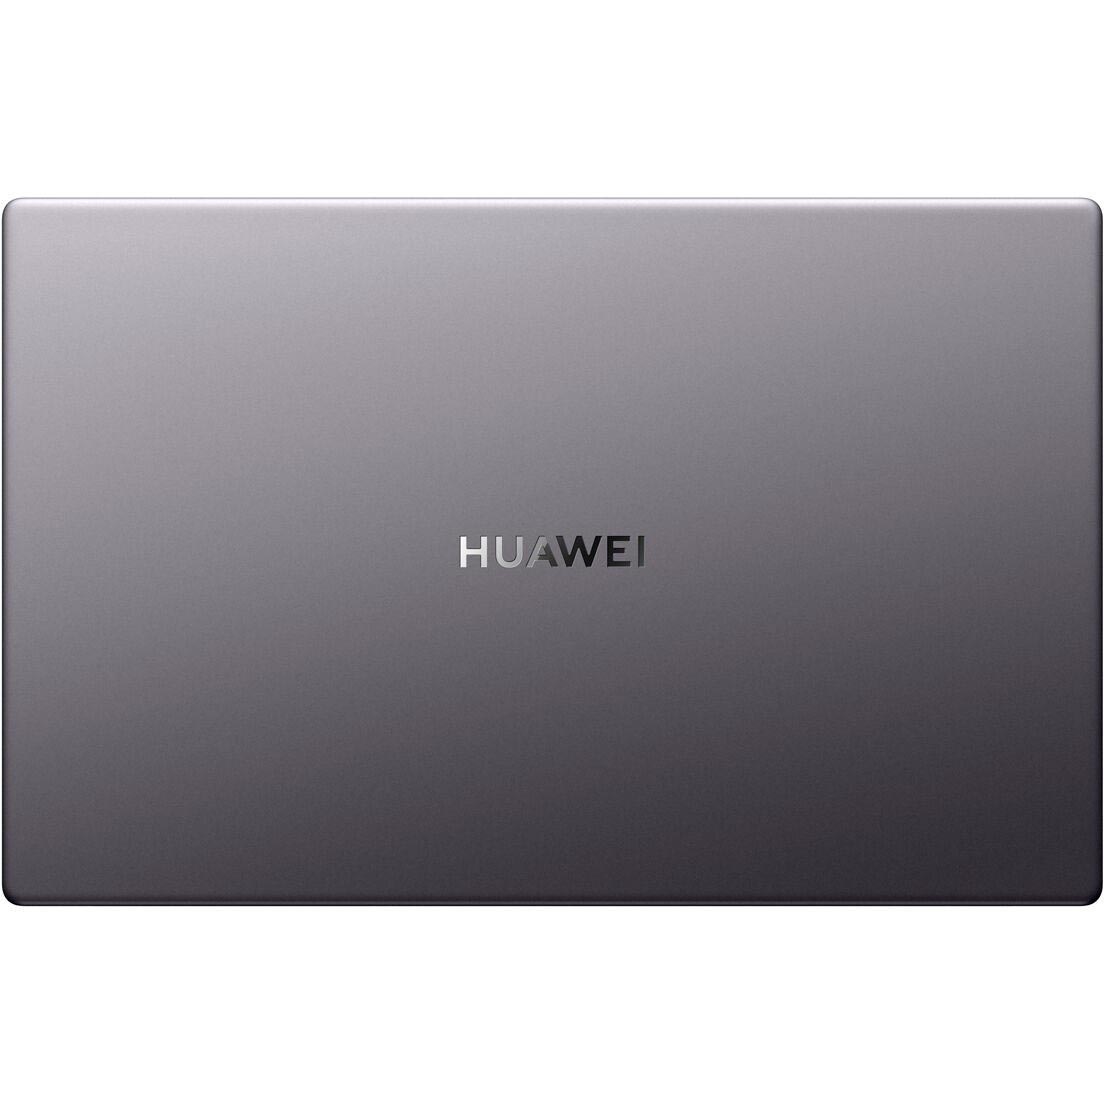 Ноутбук bode wdh9. Ноутбук Huawei MATEBOOK d15 bod wdi9. Ноутбук ASUS x540ma-gq035. Ноутбук Huawei MATEBOOK D 14 NBM-wdq9 8+512gb Space Grey. Ультрабук Huawei MATEBOOK D 14.